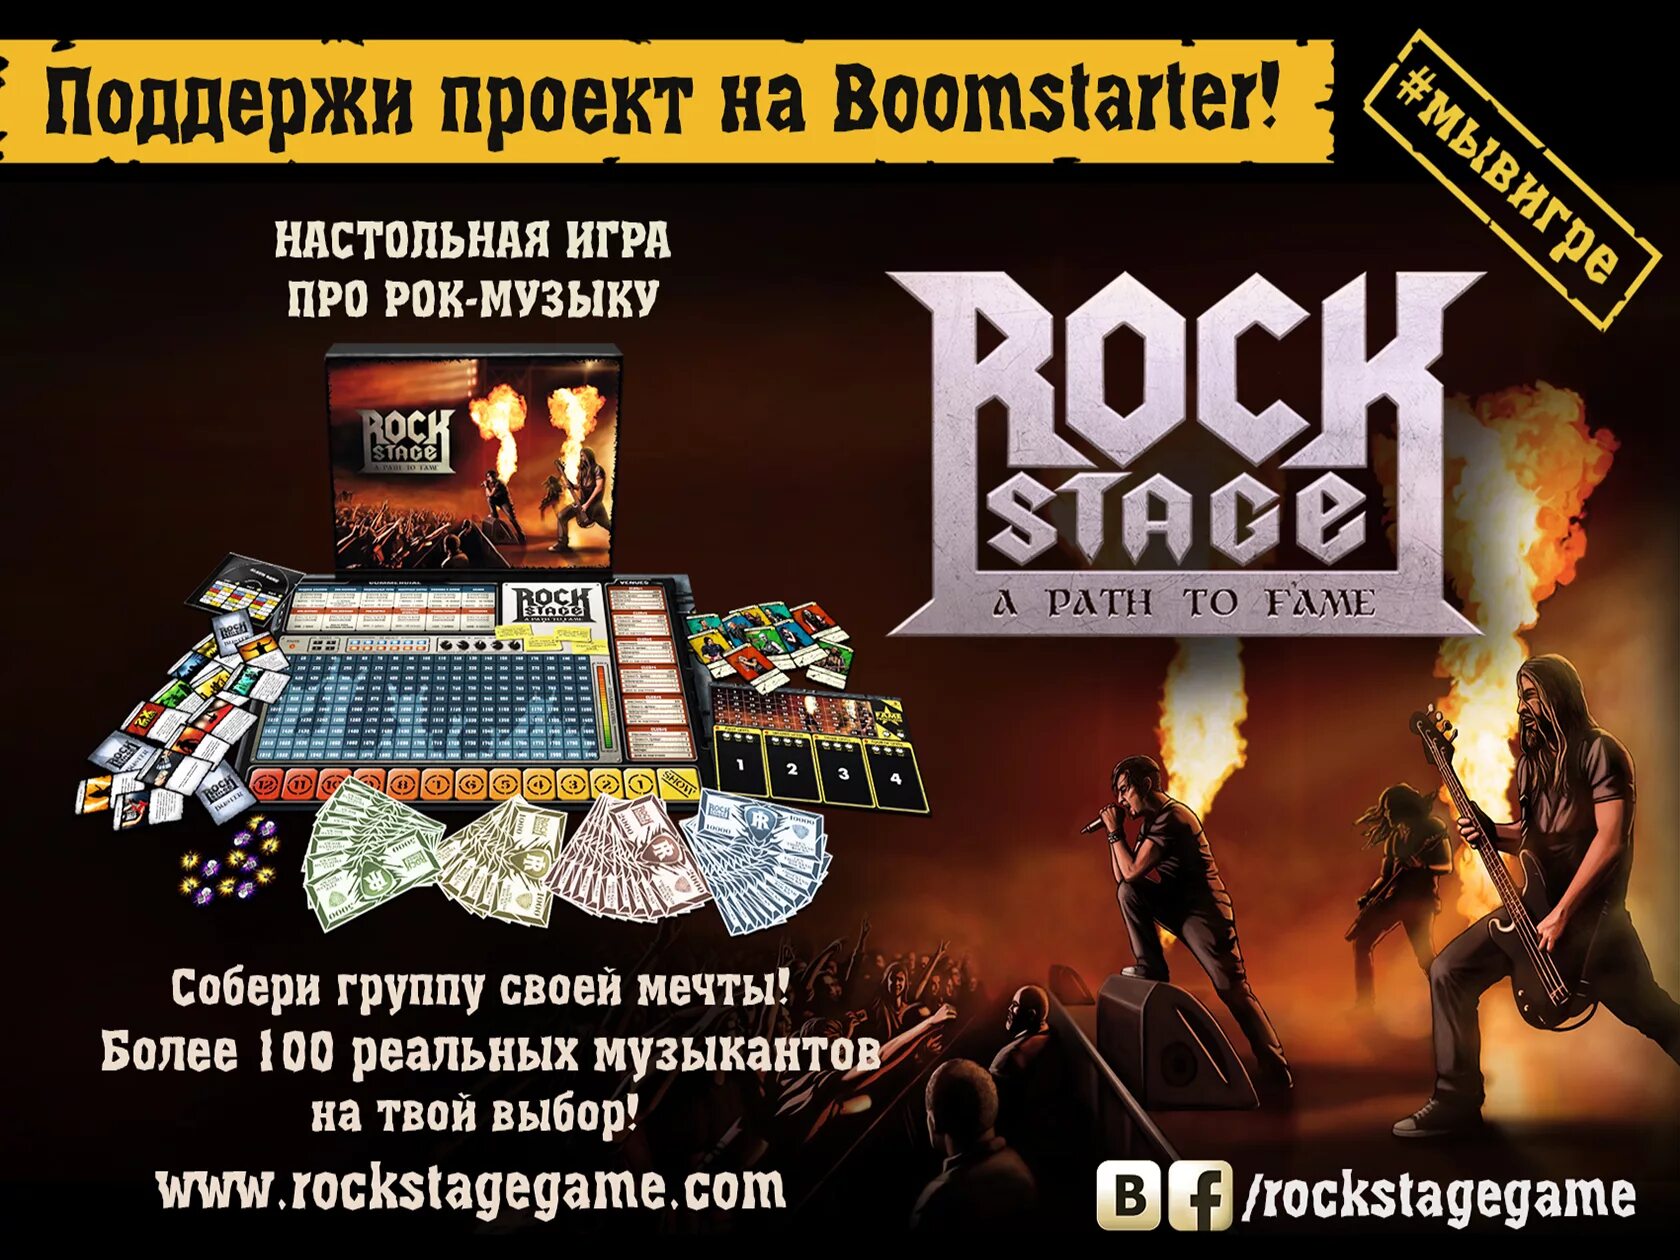 Rock Stage: а Path to Fame. Rock Stage игра. Настольная игра Rock Stage: а Path to Fame. Настольная игра для музыкантов. Игры рок группы